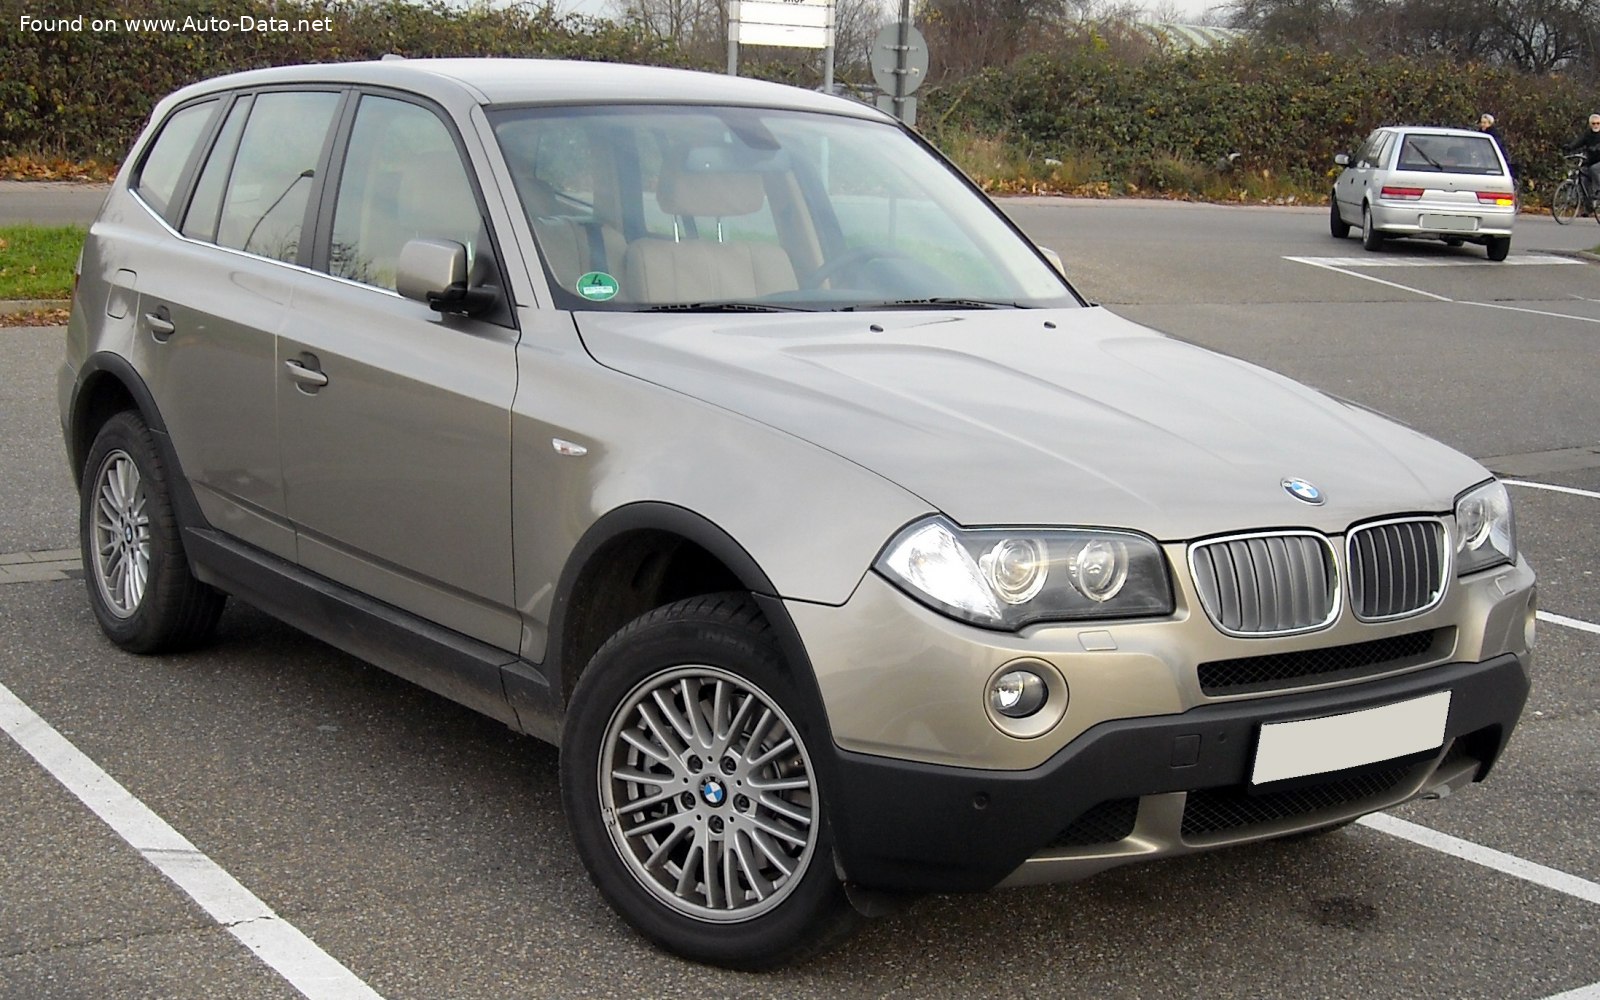 https://www.auto-data.net/images/f76/BMW-X3-E83-facelift-2006.jpg